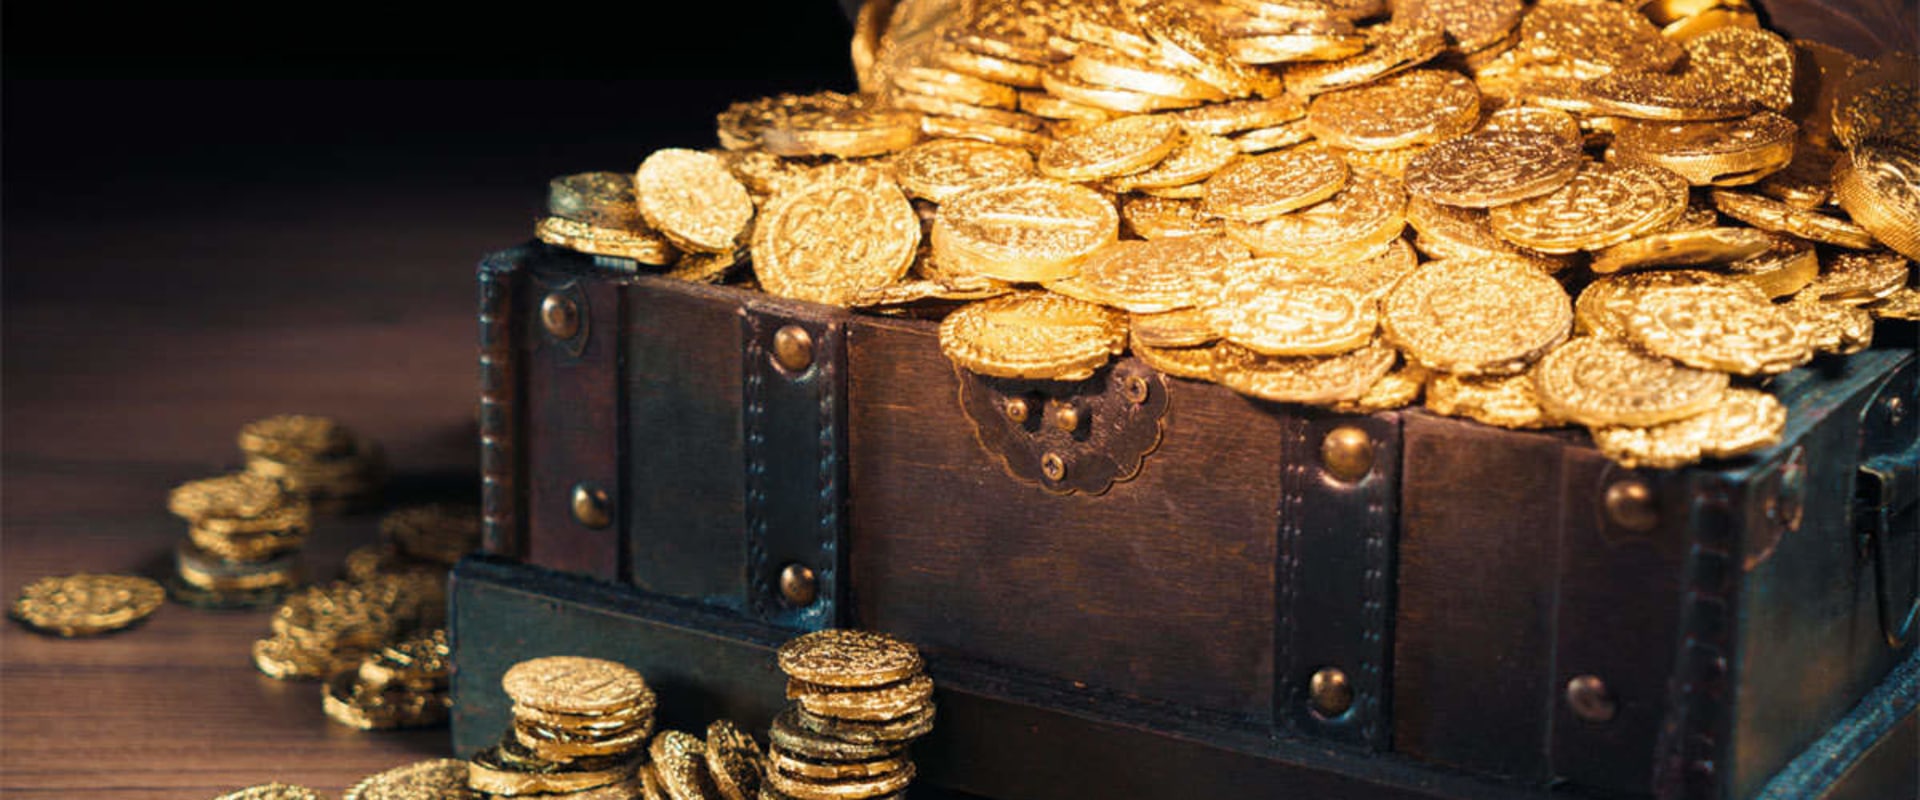 Do banks offer gold coins?